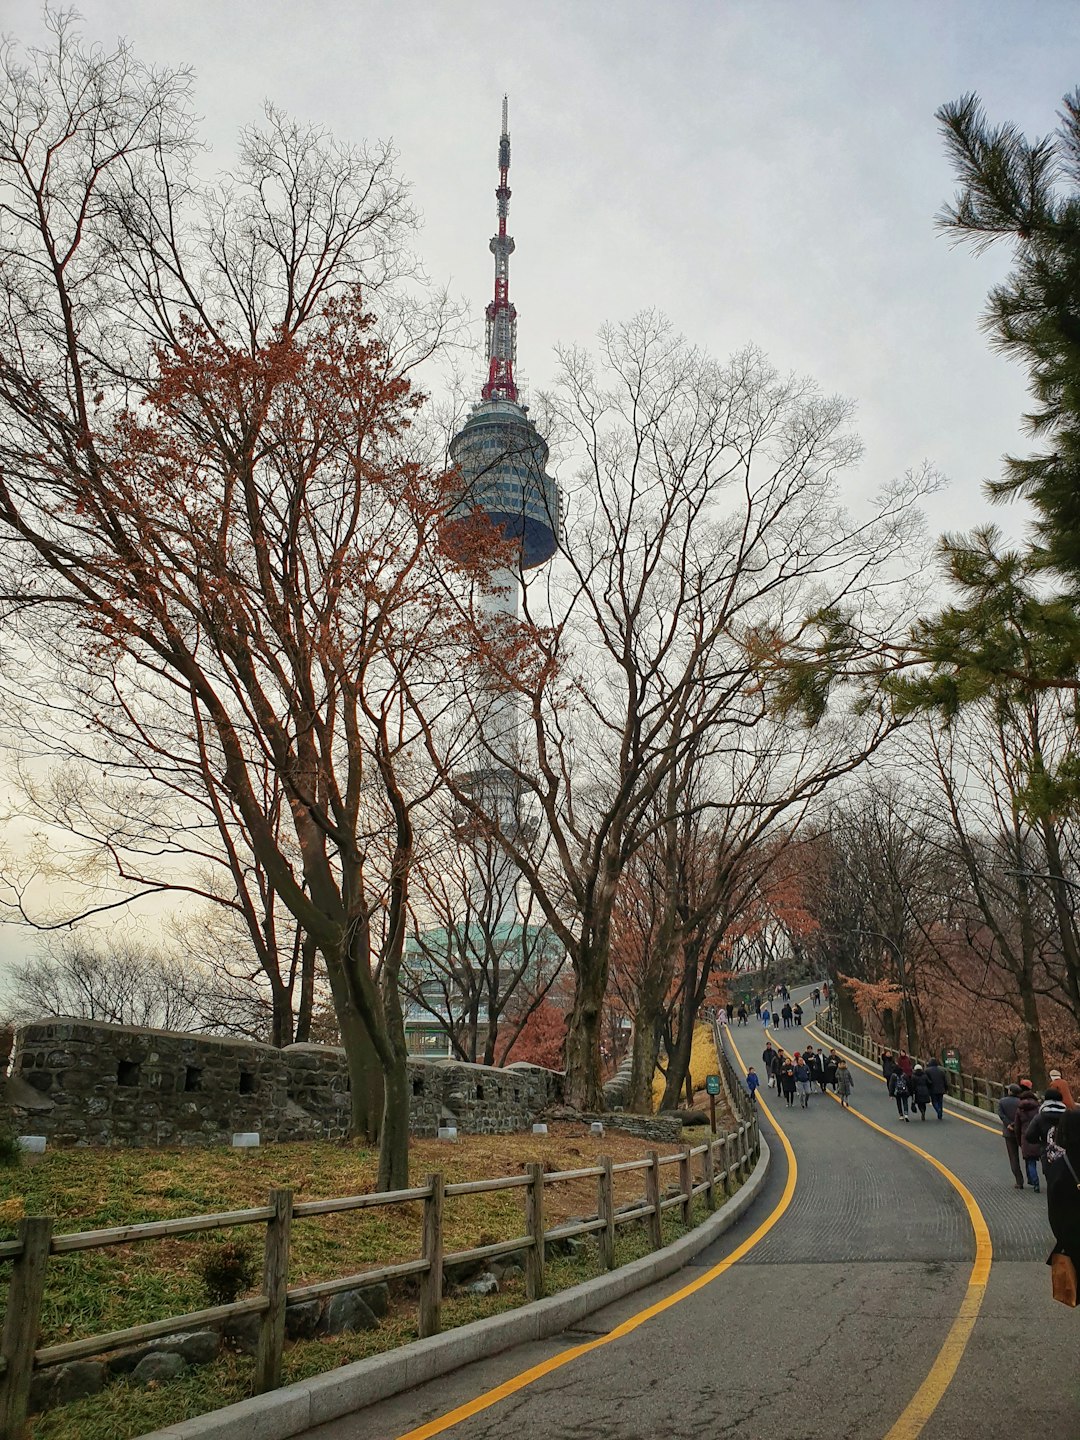 Namsan Tower - From Namsan Mountain Park, South Korea